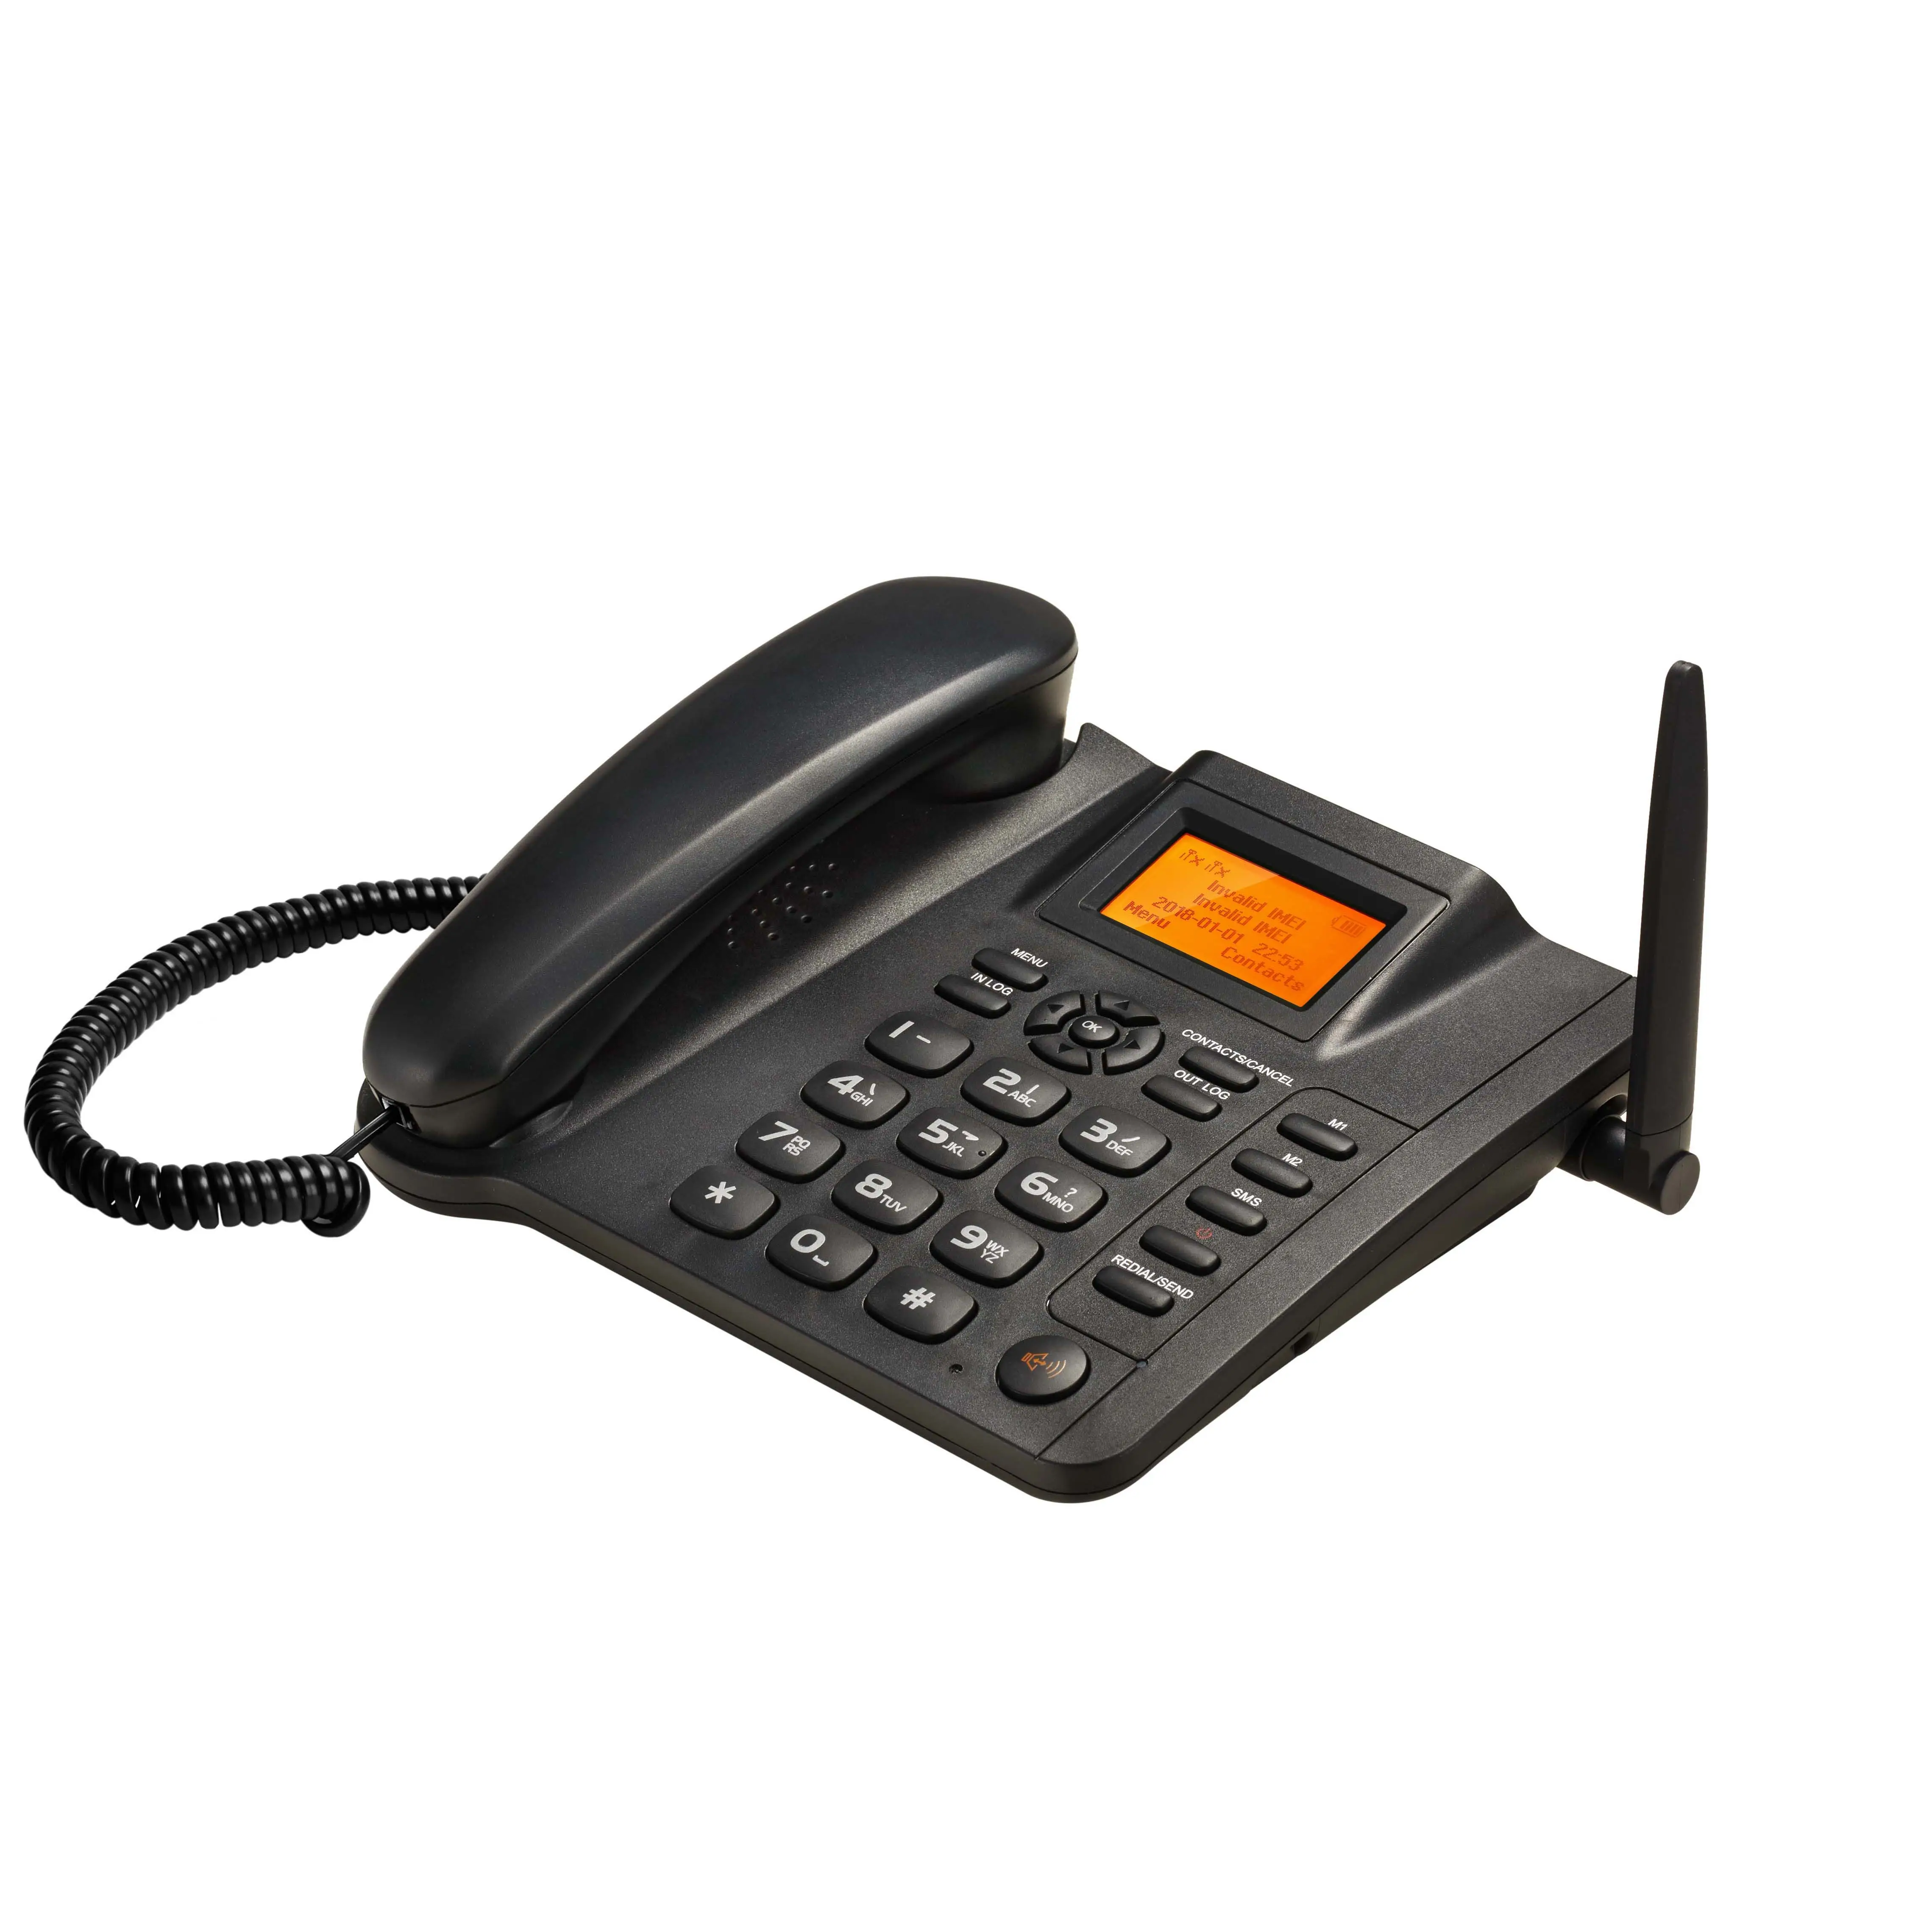 ESN-10A כפולה שני כרטיס ה-SIM GSM 2g טלפון אלחוטי קבוע FWP gsm שולחן העבודה טלפון